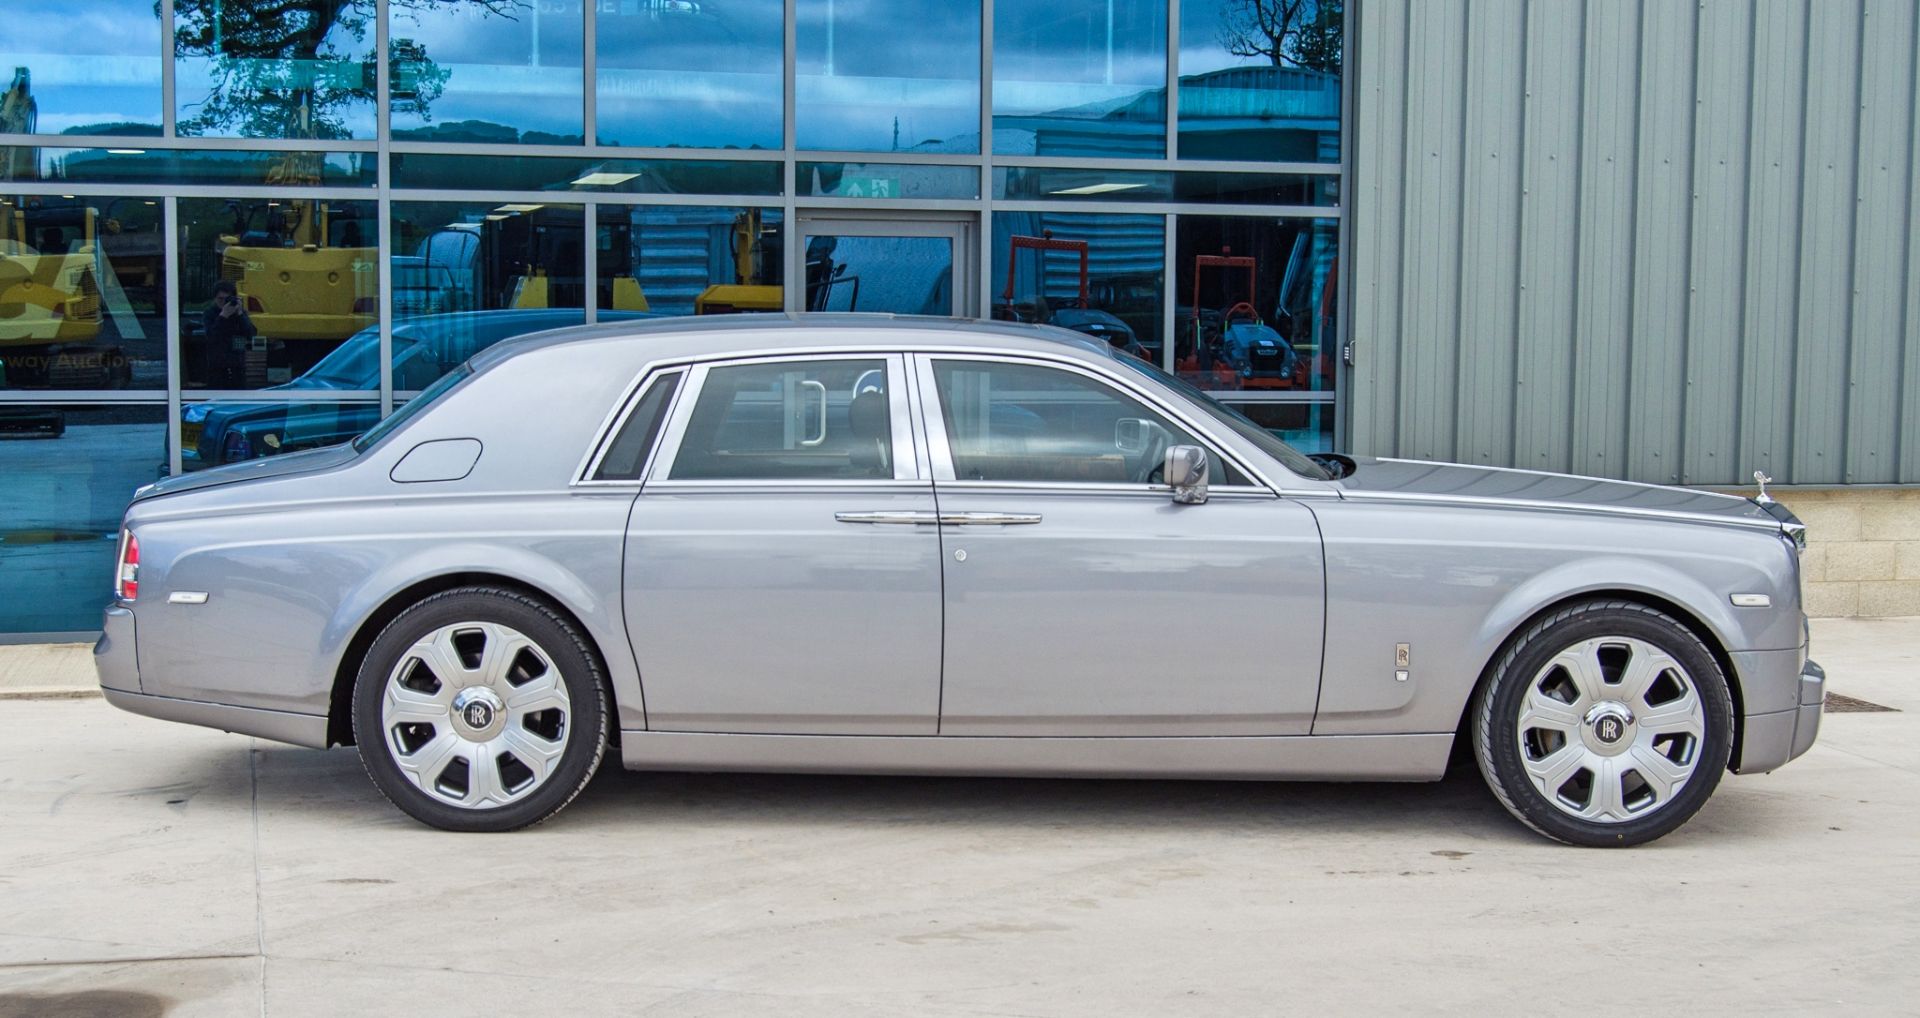 Rolls Royce Phantom 6749cc V12 Auto 4 door saloon car Registration Number: RR06 DOR Date of - Image 14 of 59